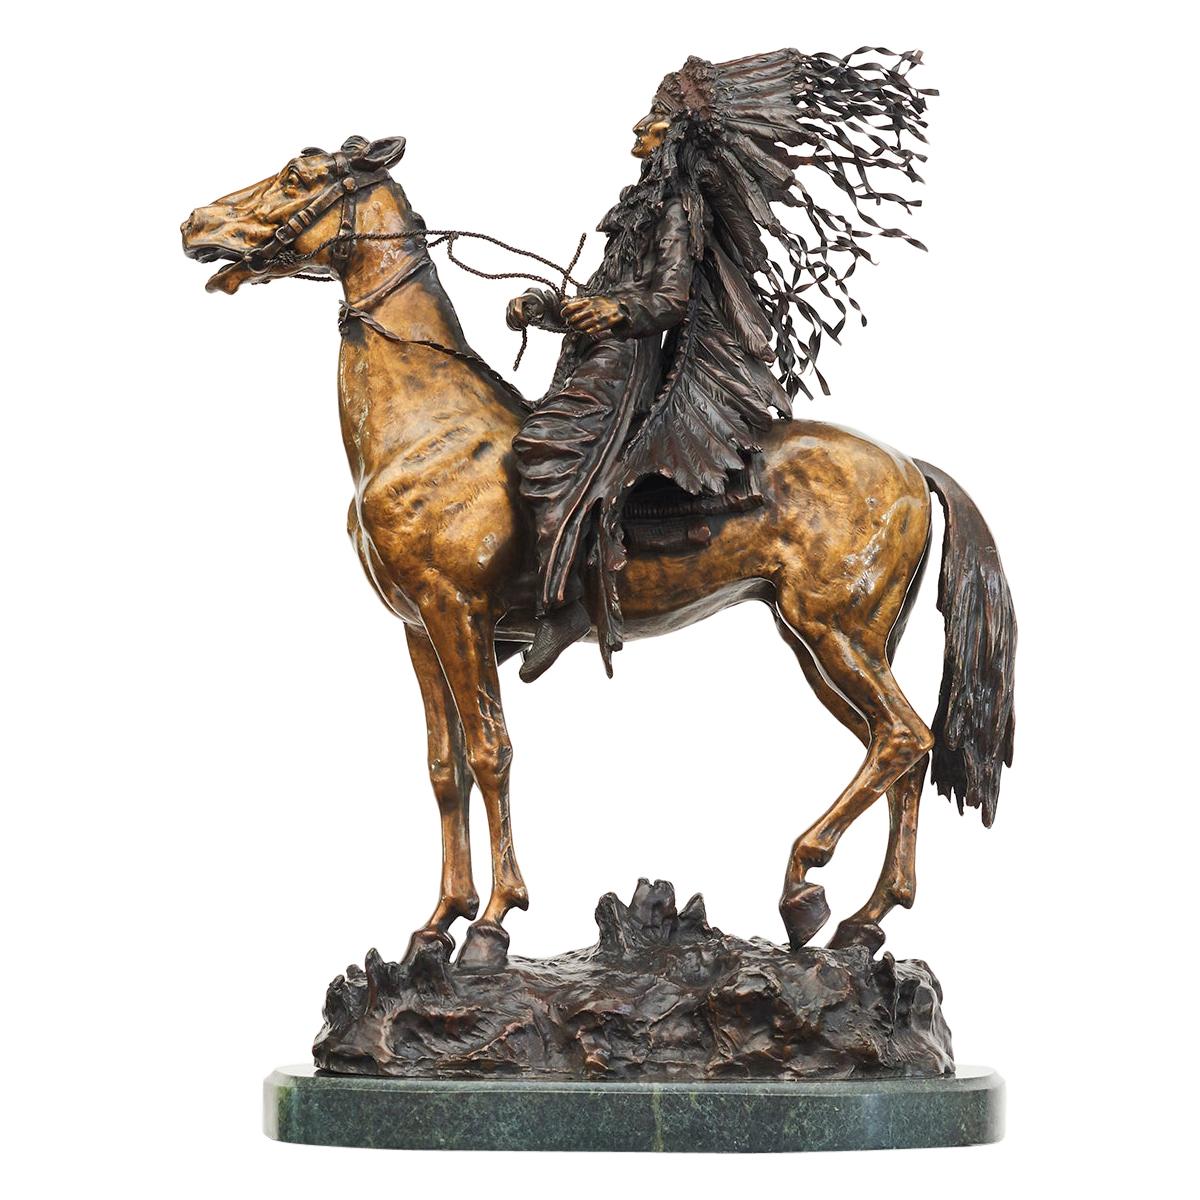 Carl Kauba Bronze Sculpture, "Indian Chief on Horseback"